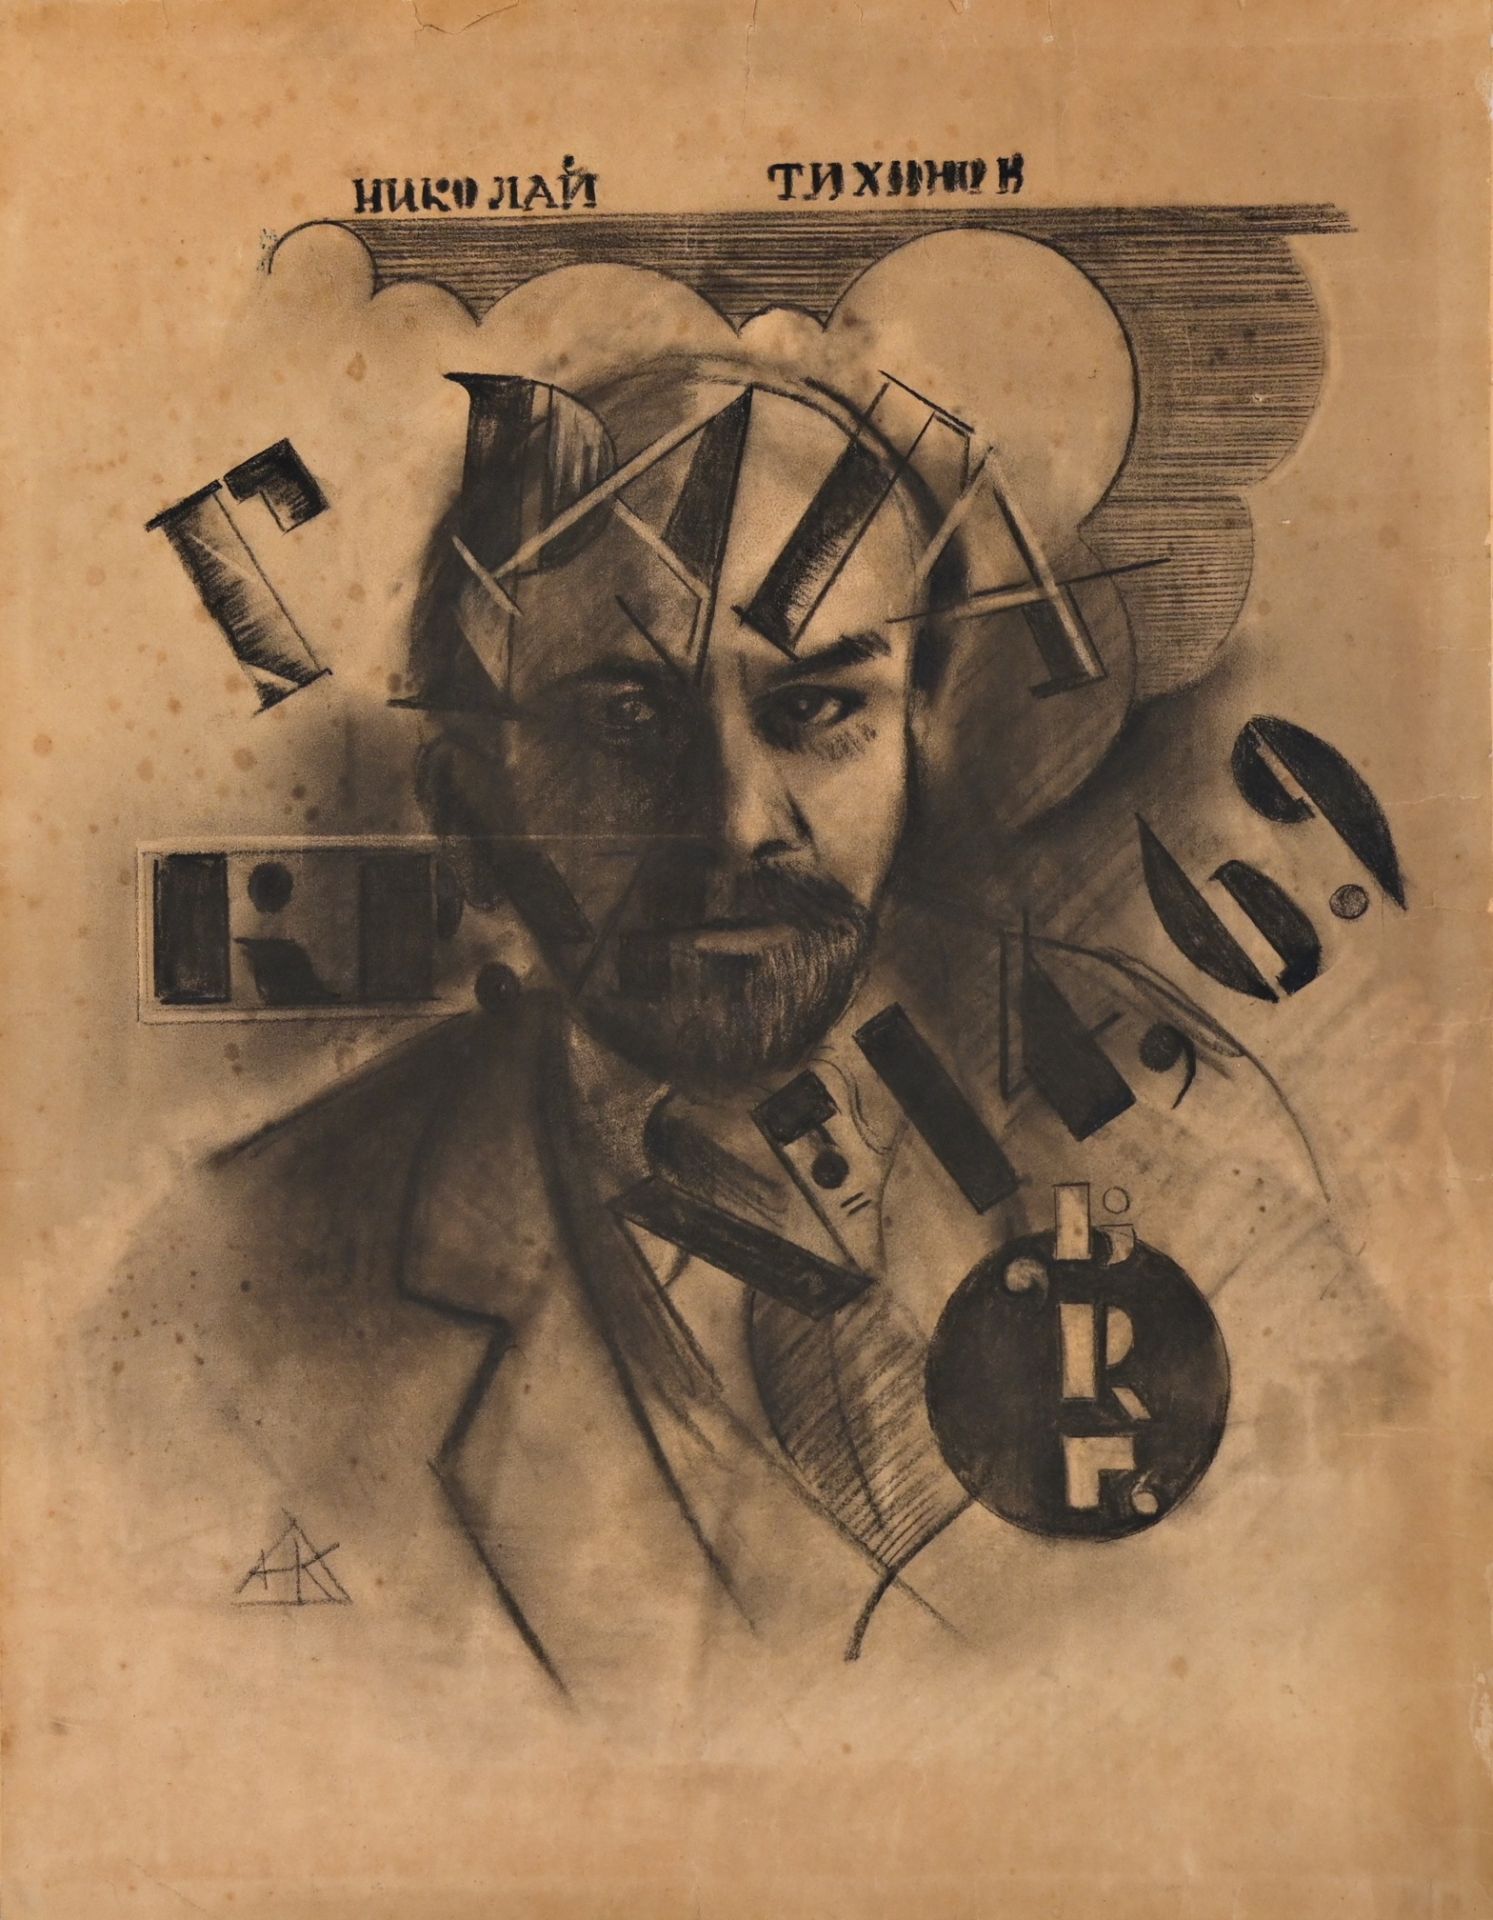 Drawing for Nikolai Tikhonov's book "BRAGA", 1922. Paper, charcoal drawing. Author's signature. - Image 2 of 9